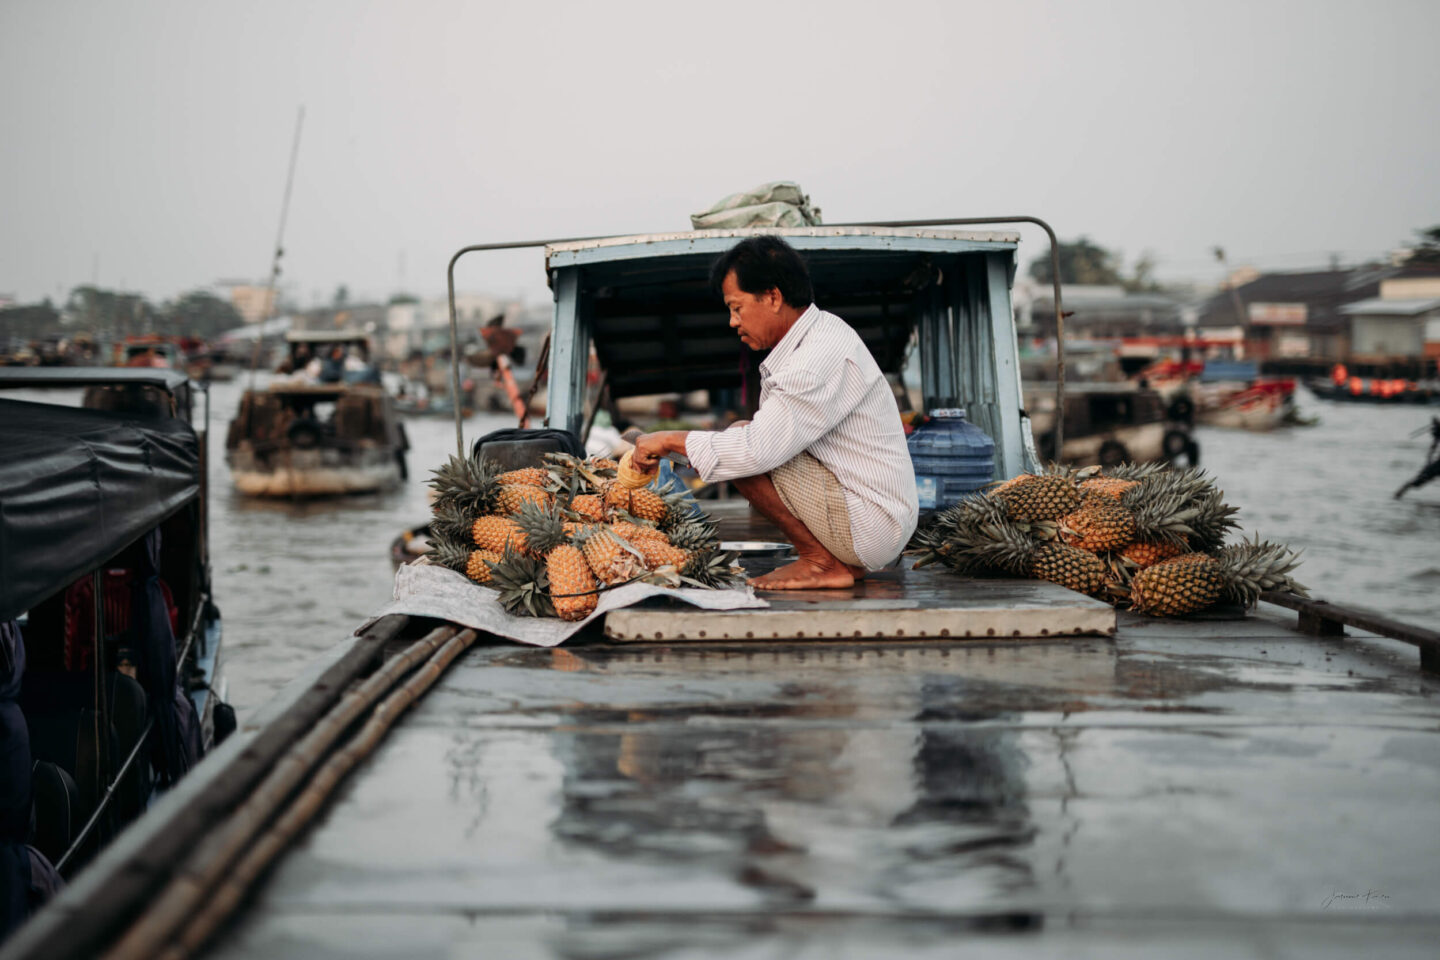 Vietnam travel, The many faces of Vietnam - photo essay